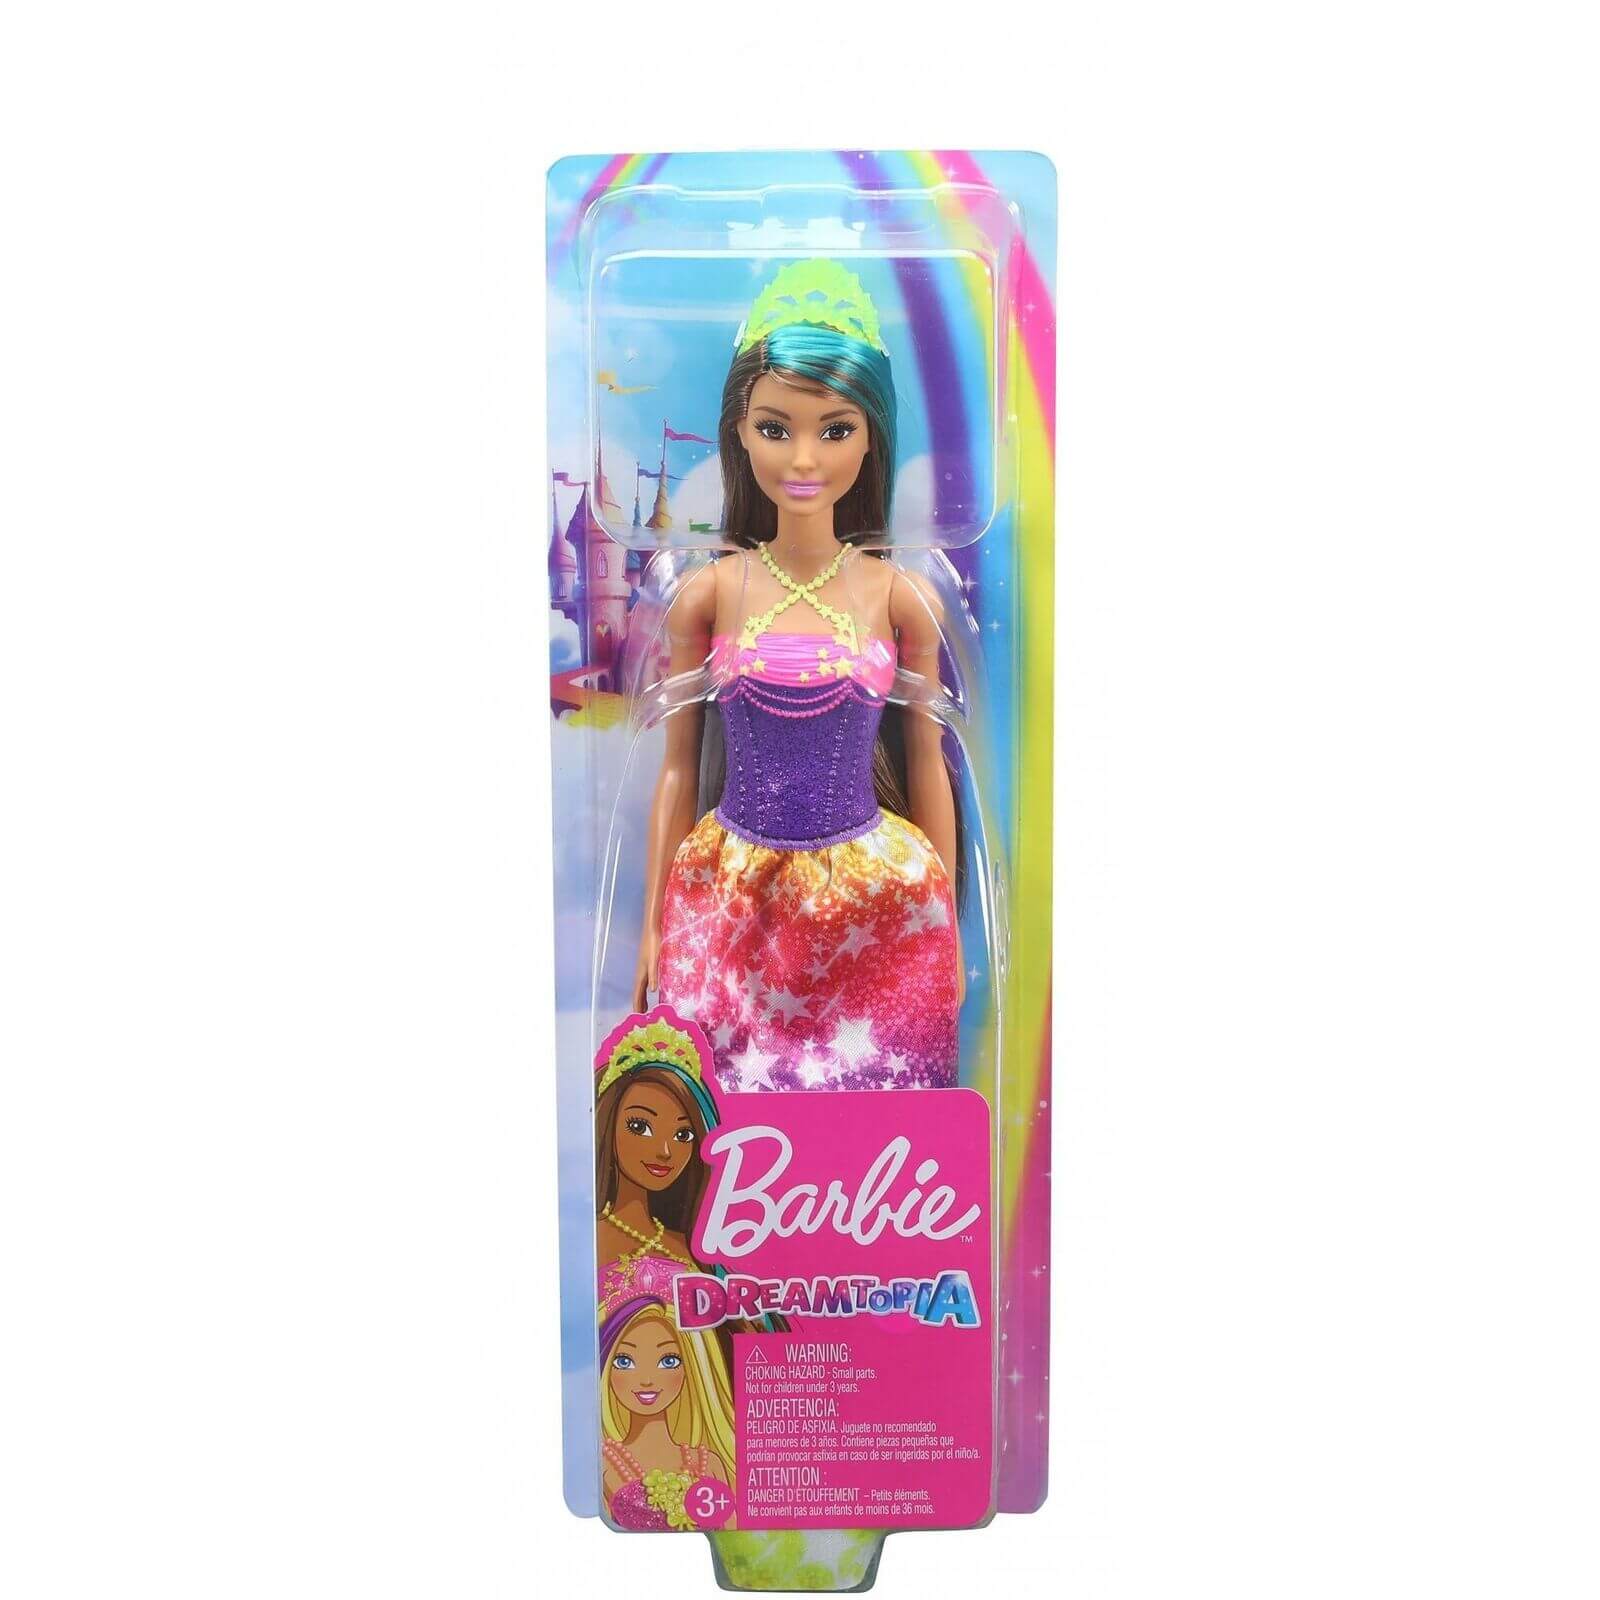 Barbie Dreamtopia Doll with Star Dress